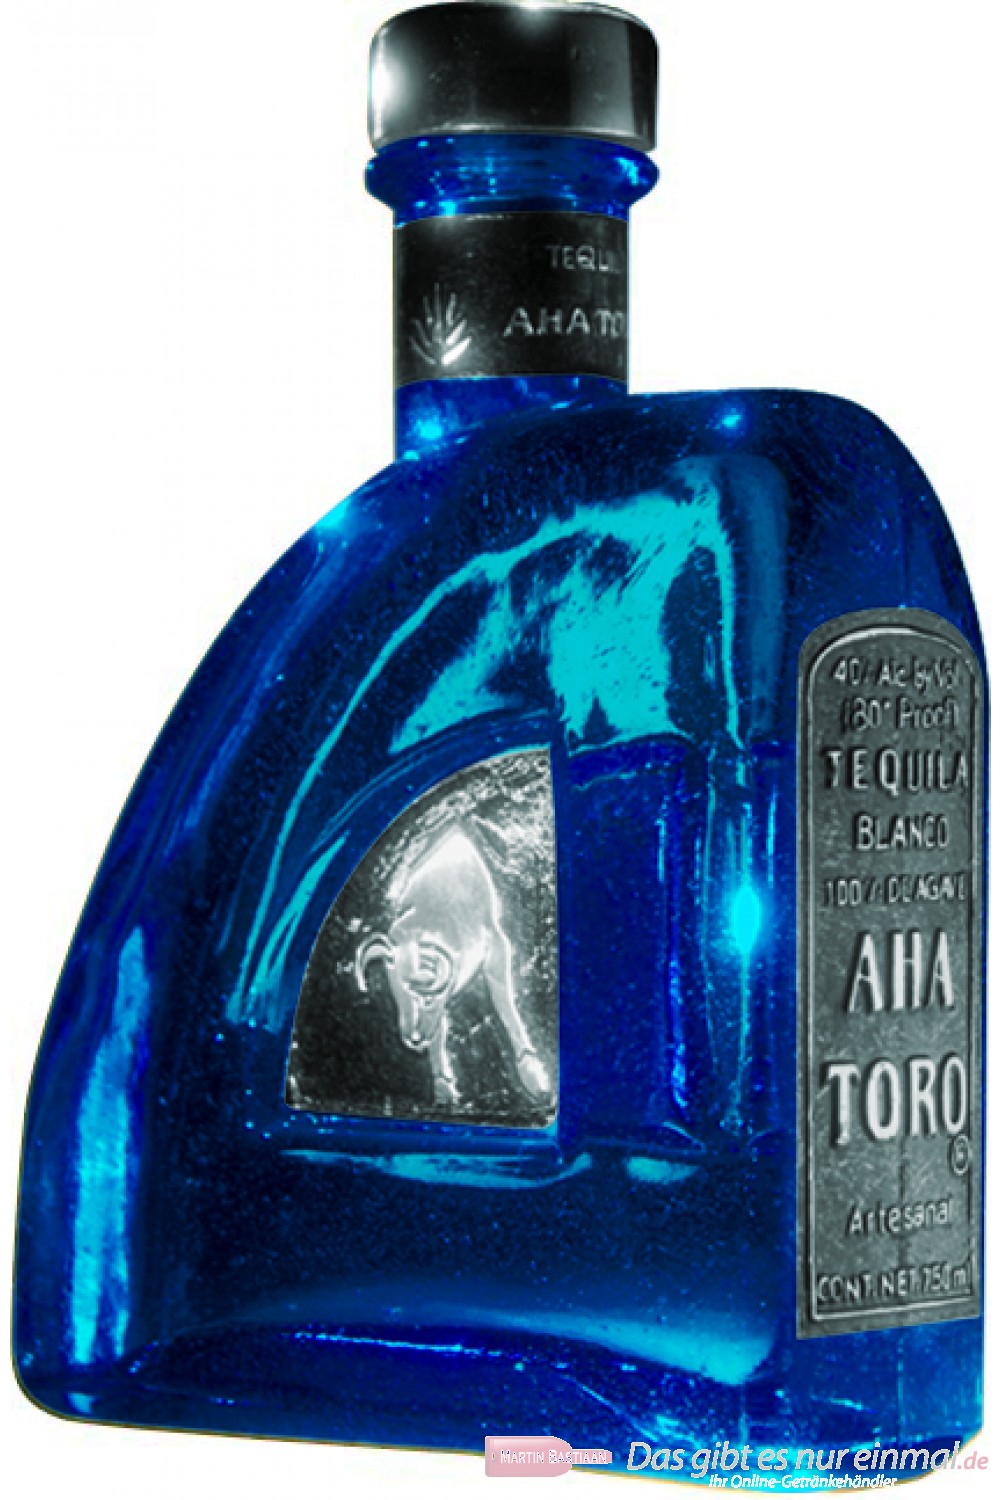 Aha Toro Blanco Tequila 40% 0,7 l Flasche